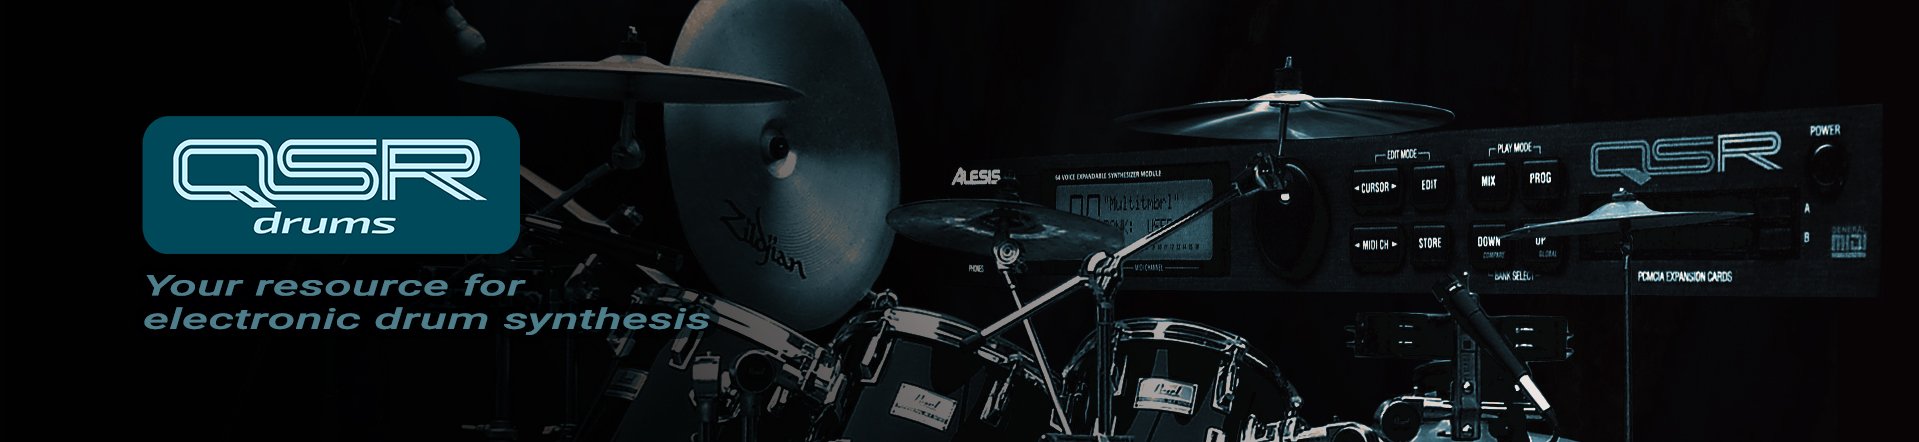 QSR drums home page banner image